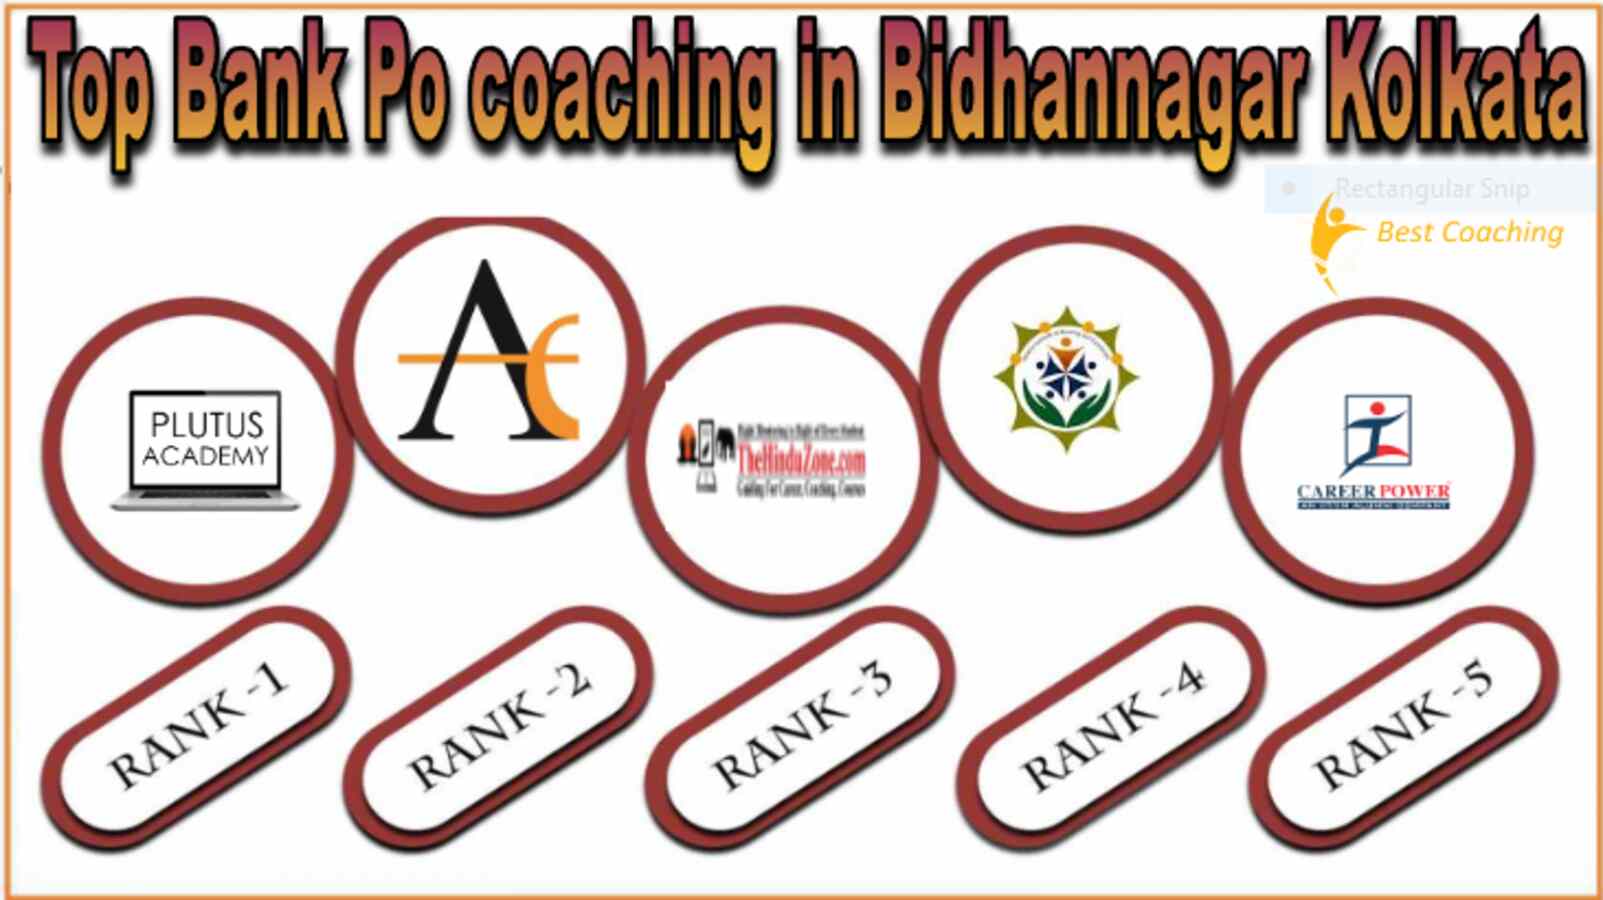 Top Bank Po coaching in Bidhannagar Kolkata